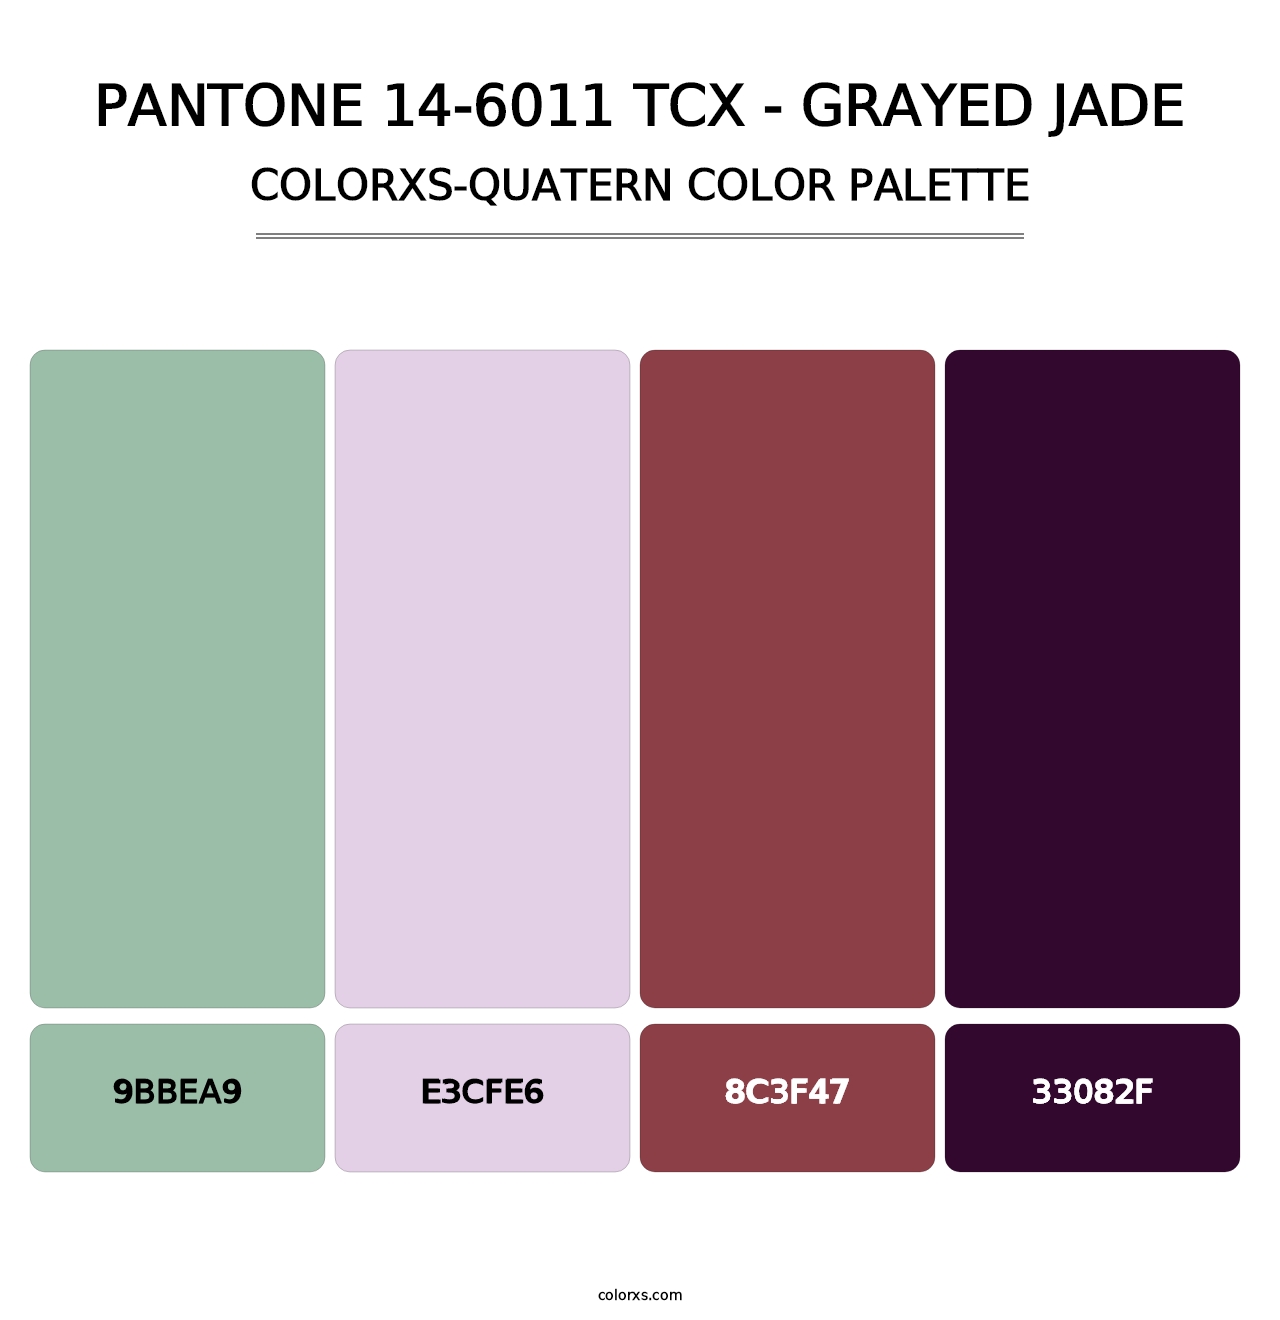 PANTONE 14-6011 TCX - Grayed Jade - Colorxs Quatern Palette